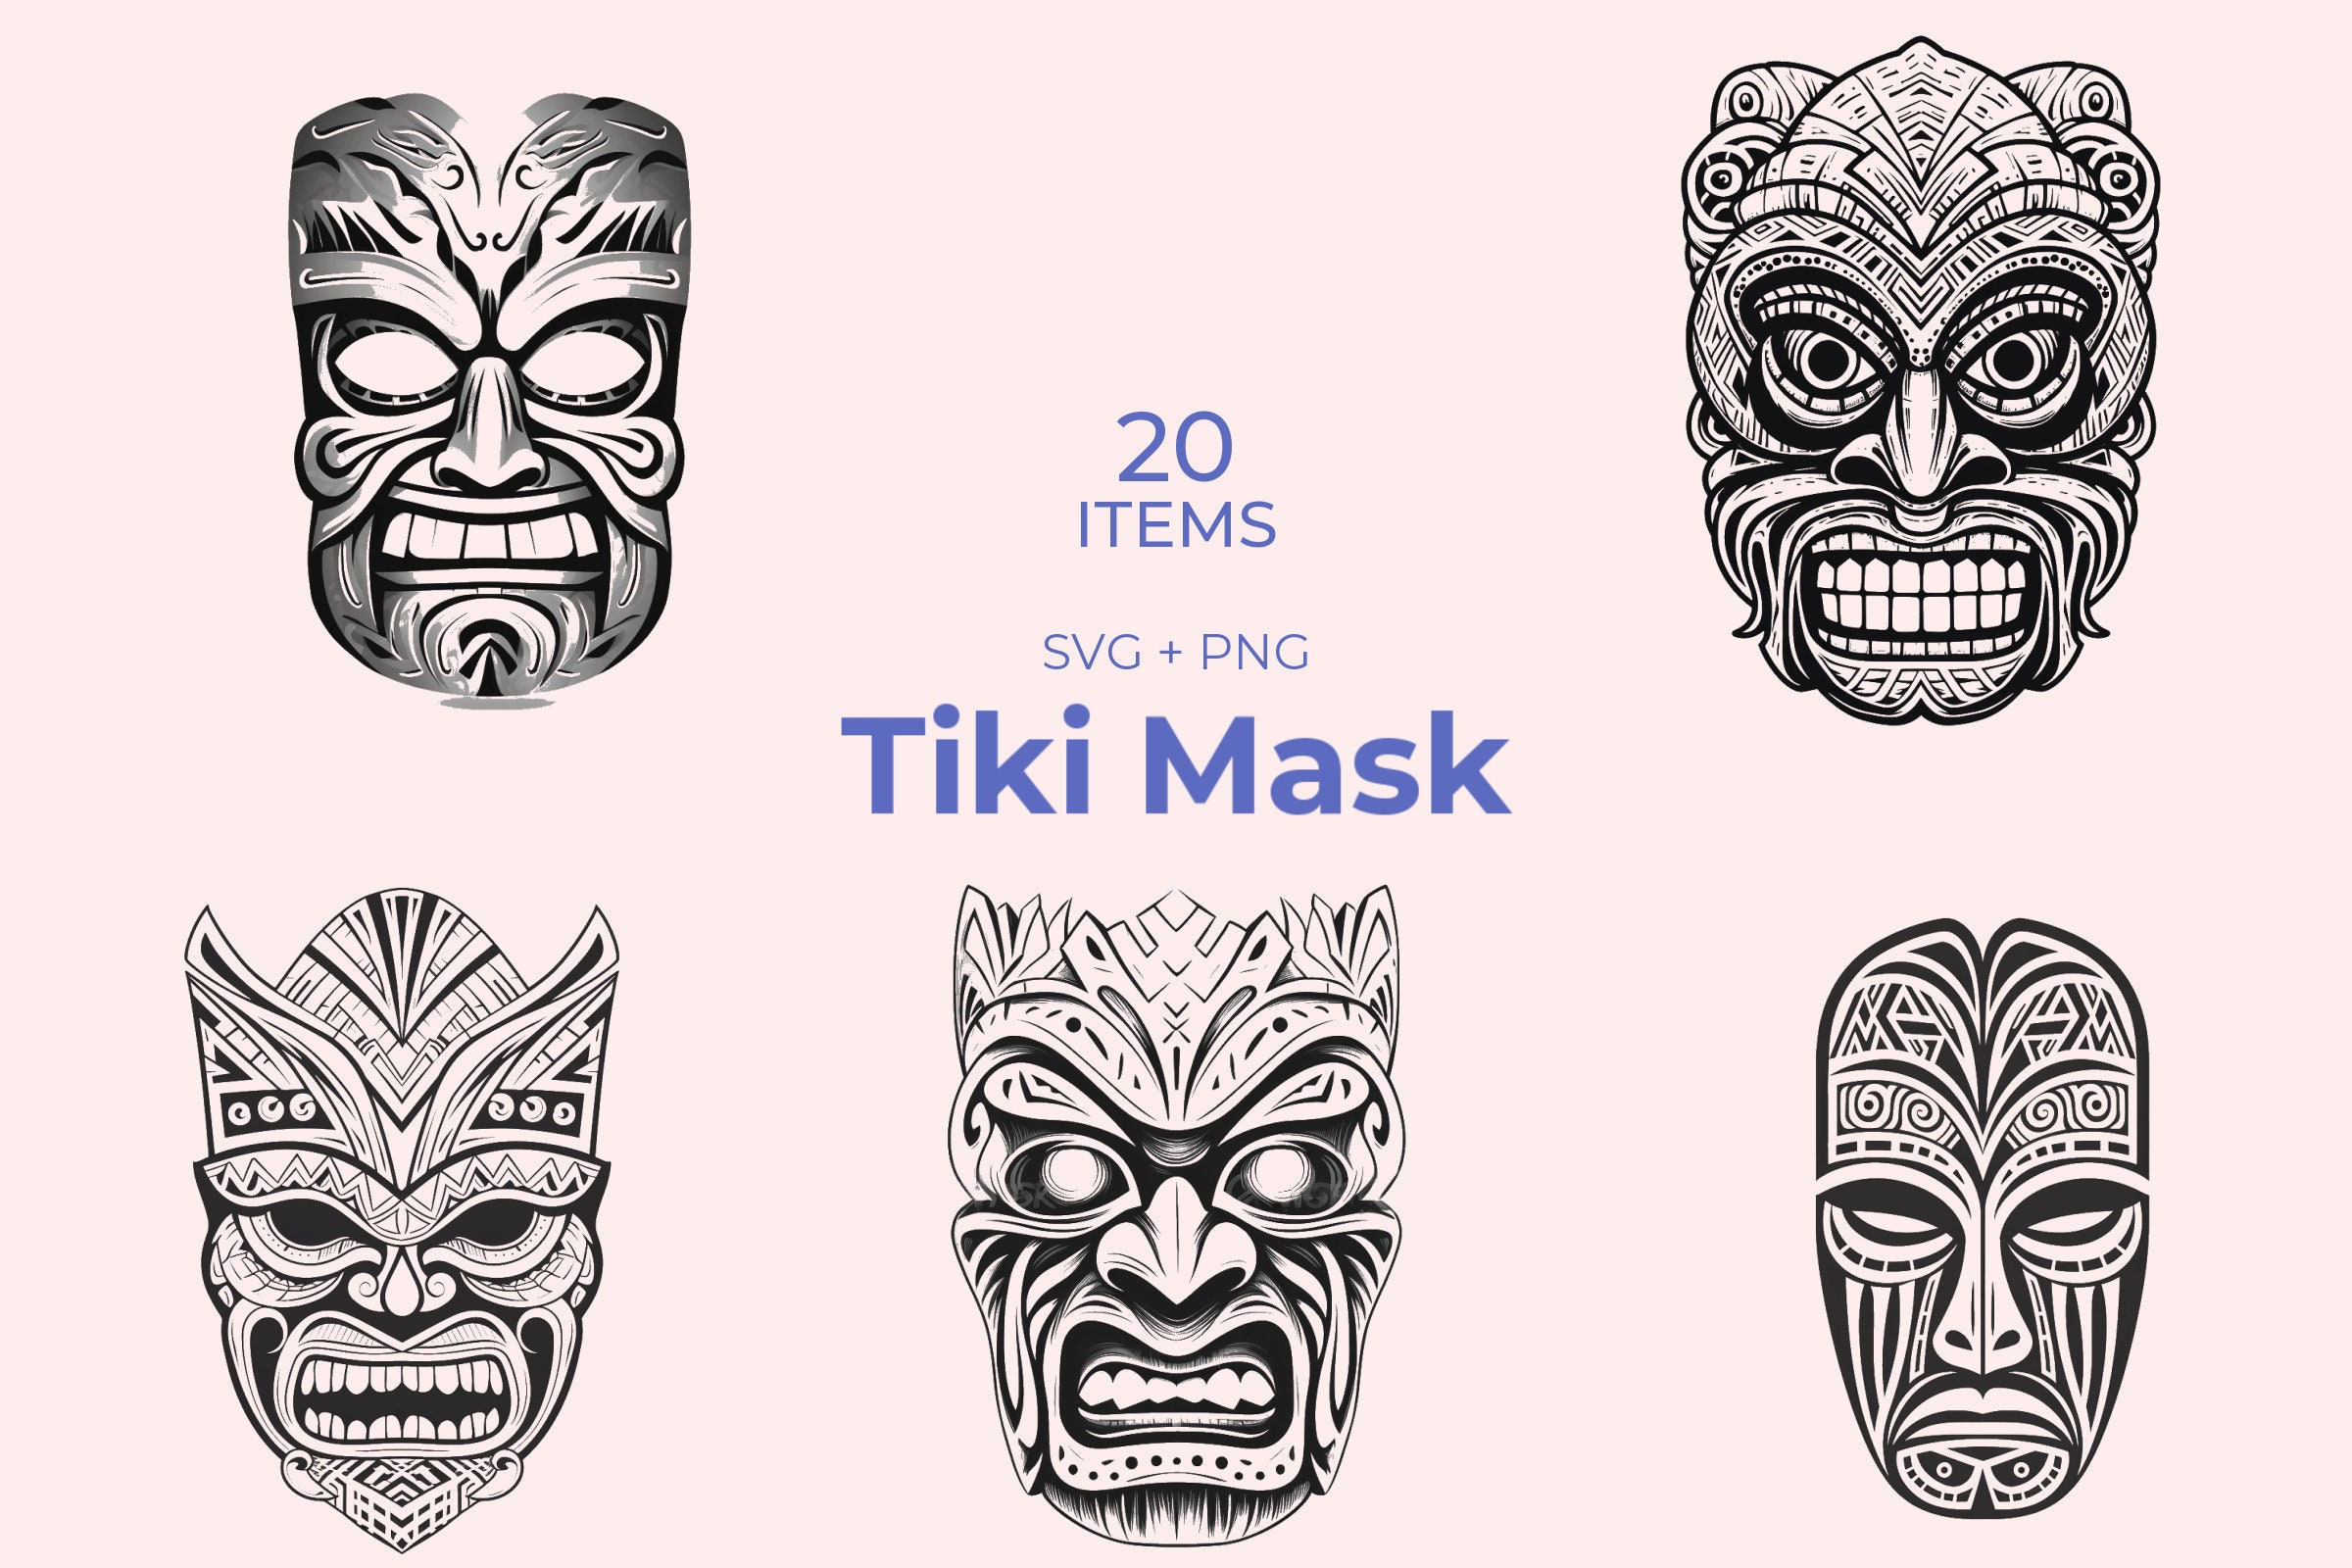 Tiki Mask SVG 20 Unique Designs Black and White Art - Etsy